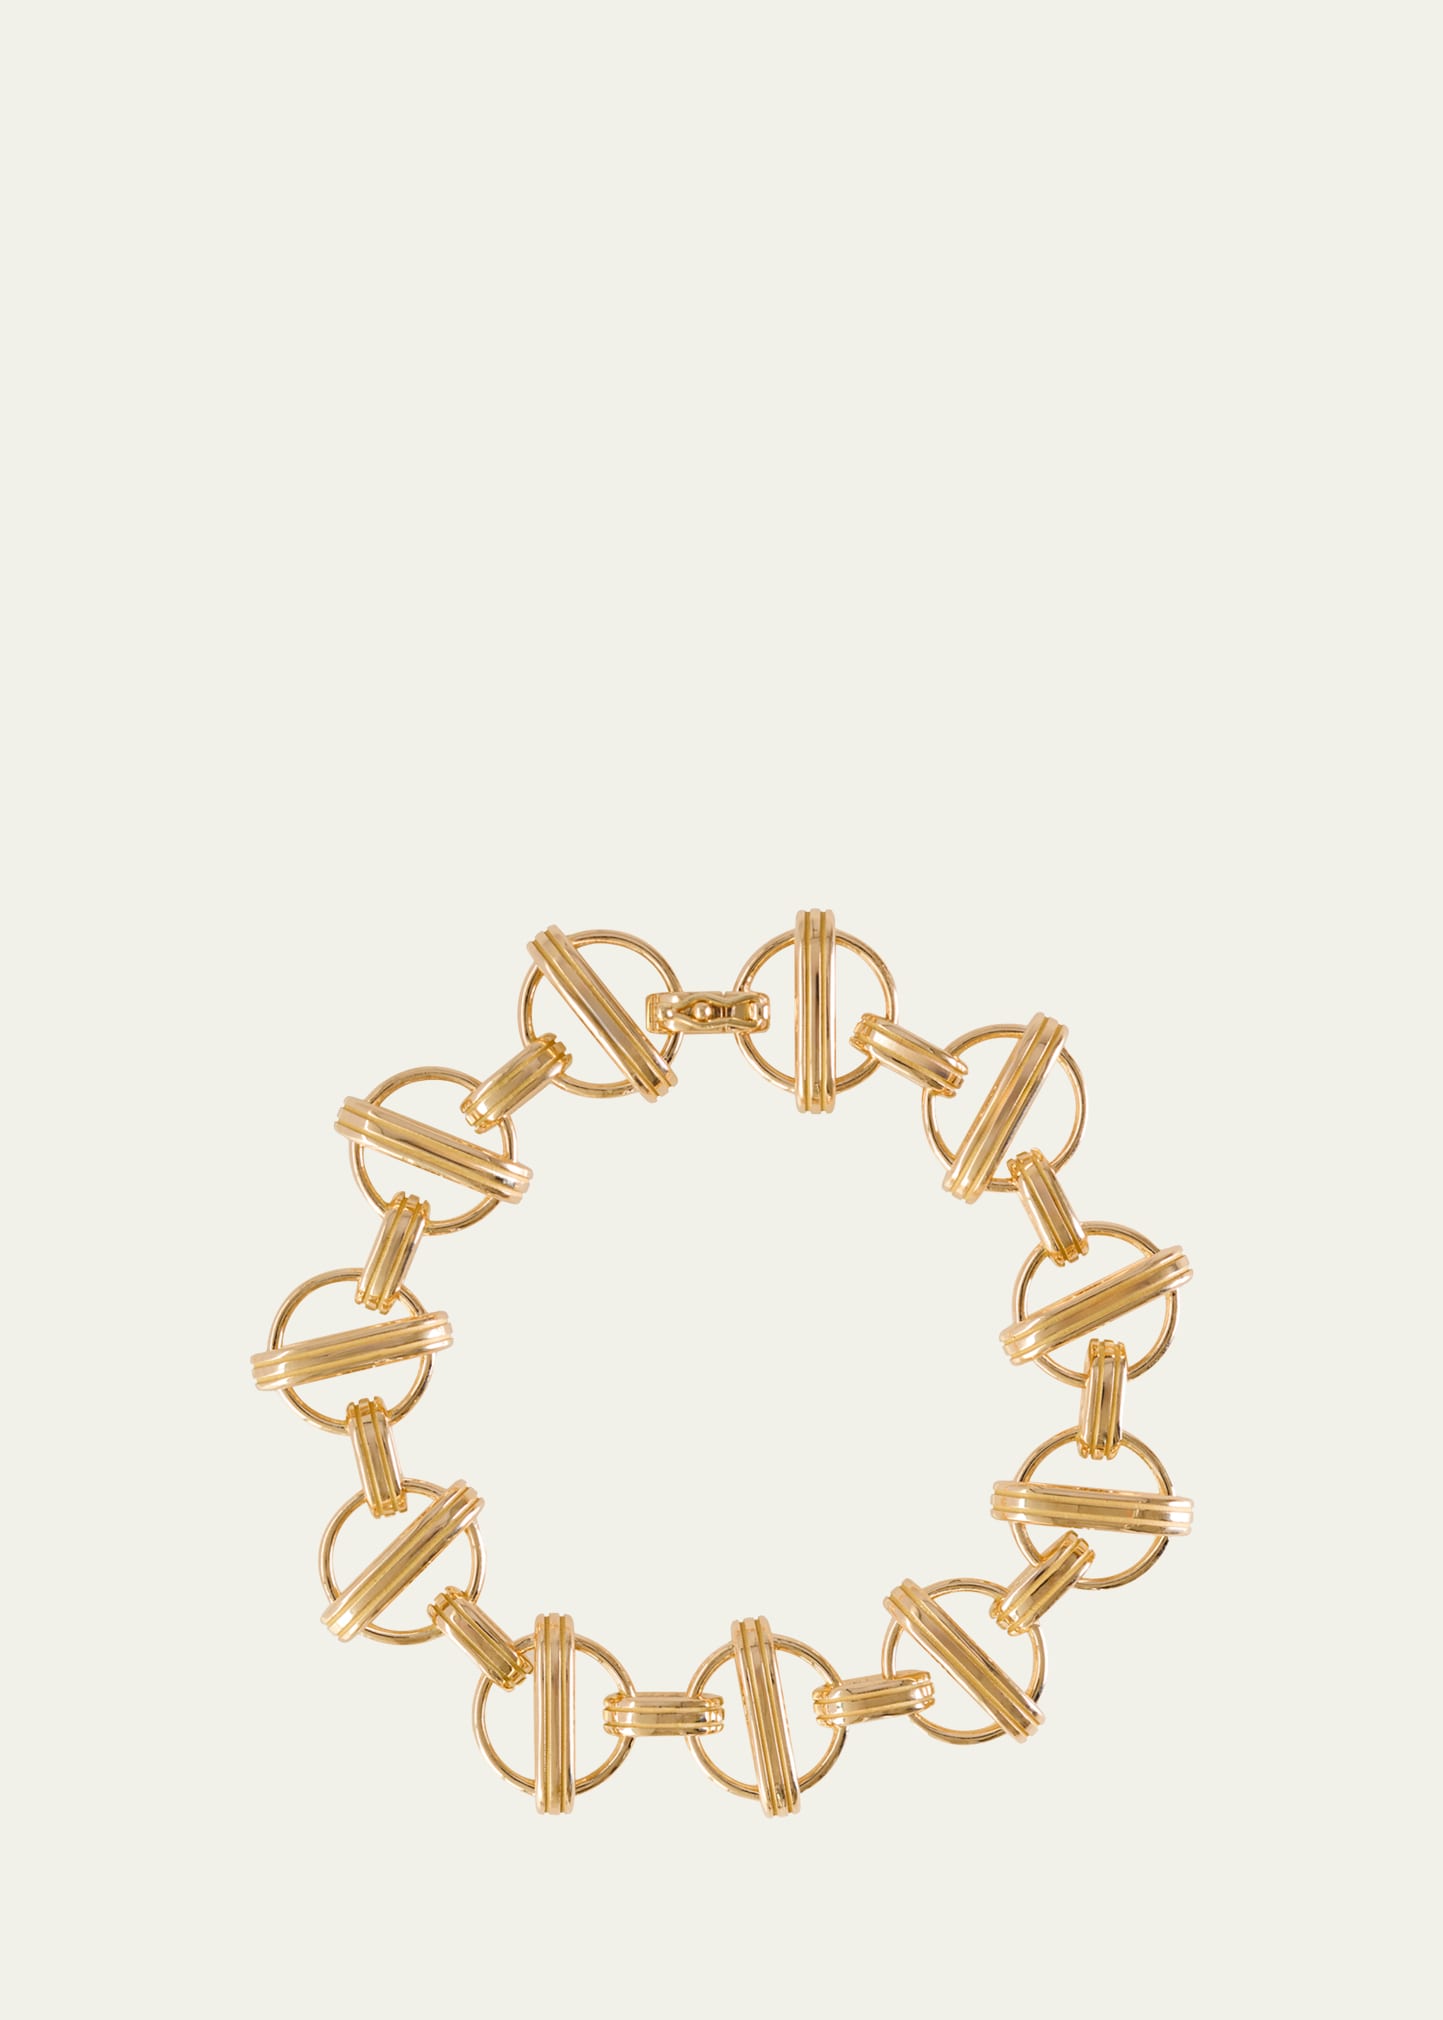 18K Gold Orbit Link Chain Bracelet, 7.25"